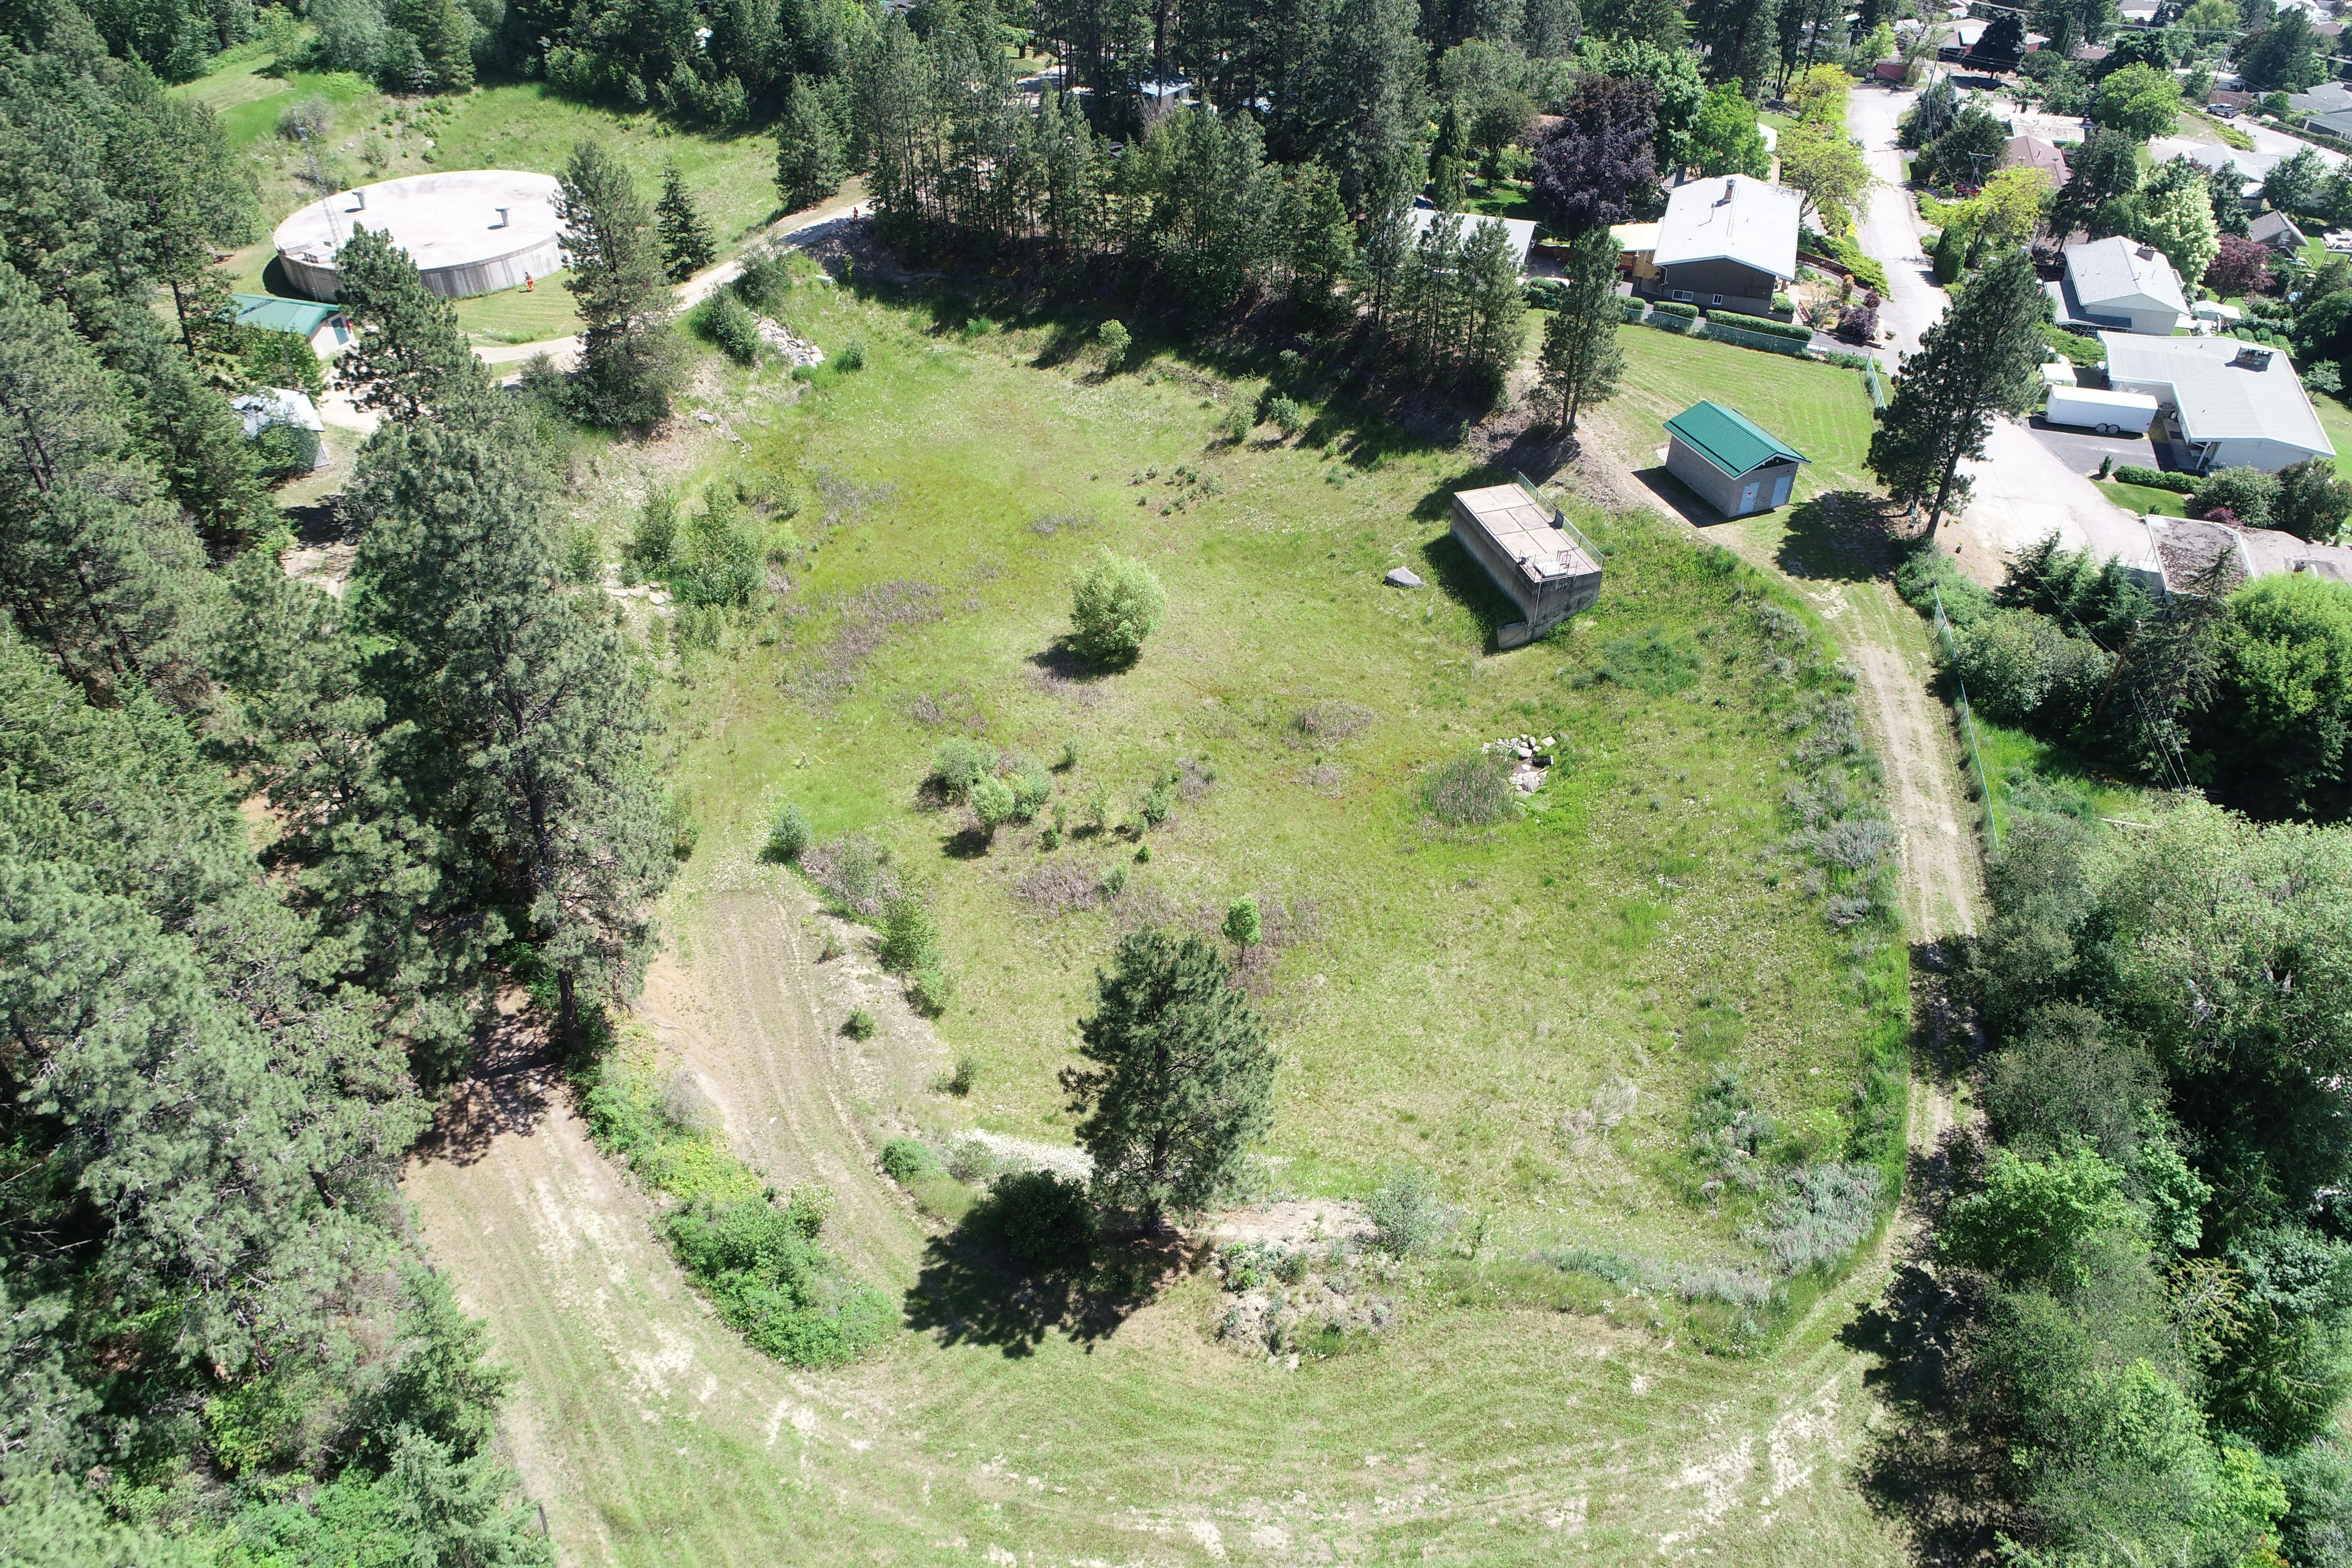 2020 Drone photo of southwest reservoir prior to restoration works